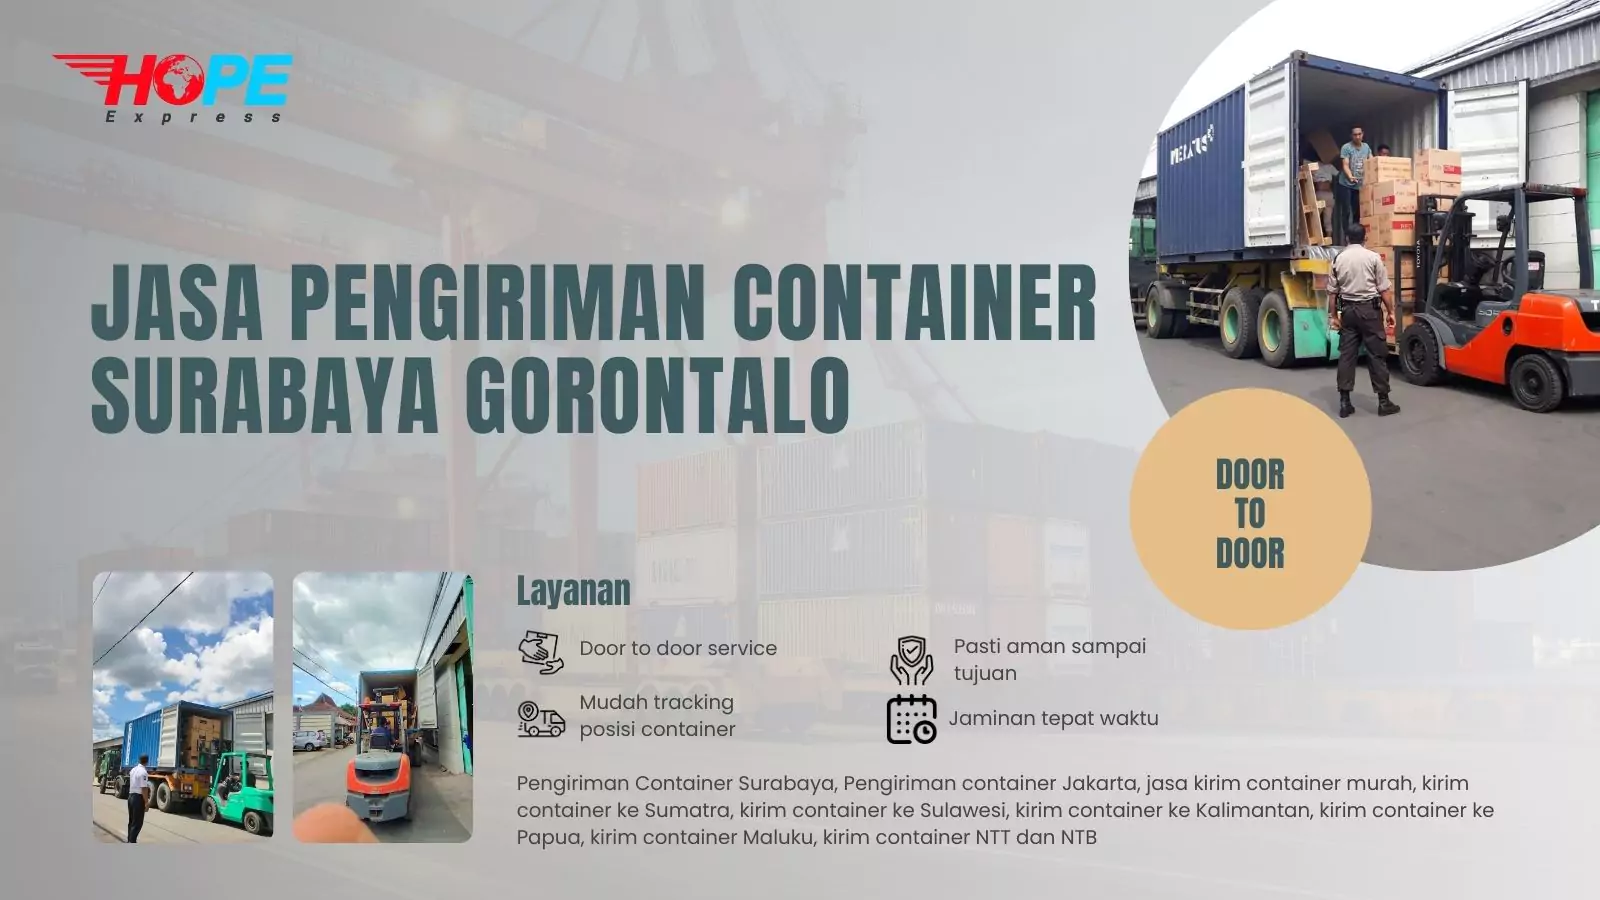 Jasa Pengiriman Container Surabaya Gorontalo